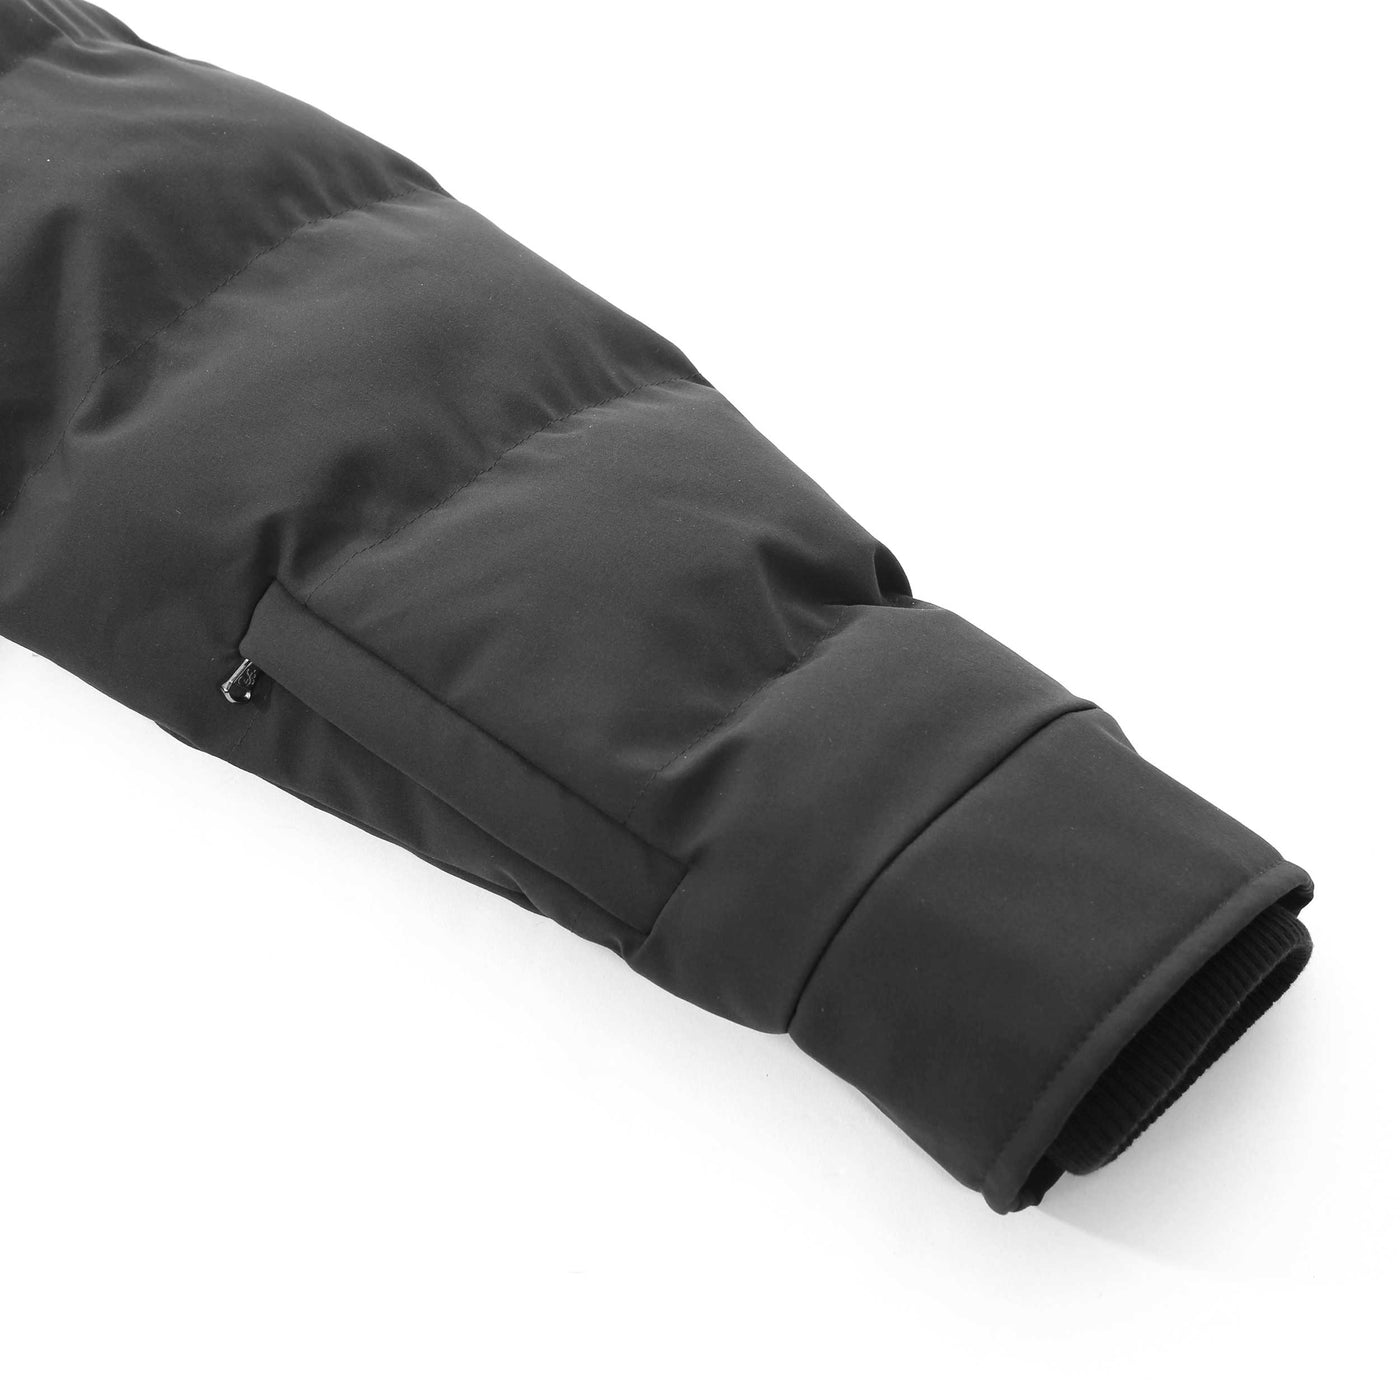 Sandbanks Branksome Long Puffer Jacket in Charcoal Cuff